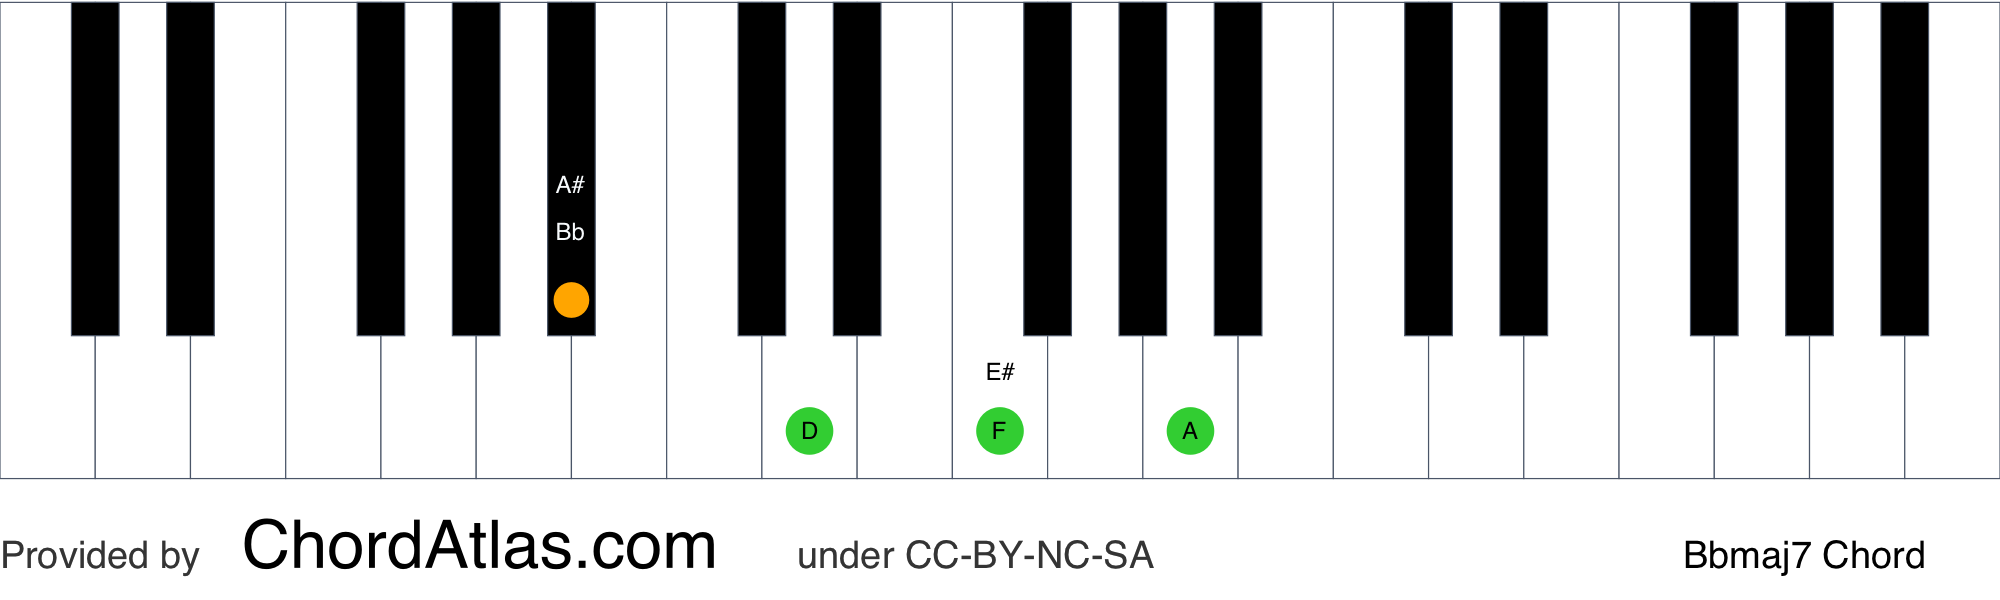 d flat major 7 piano chord